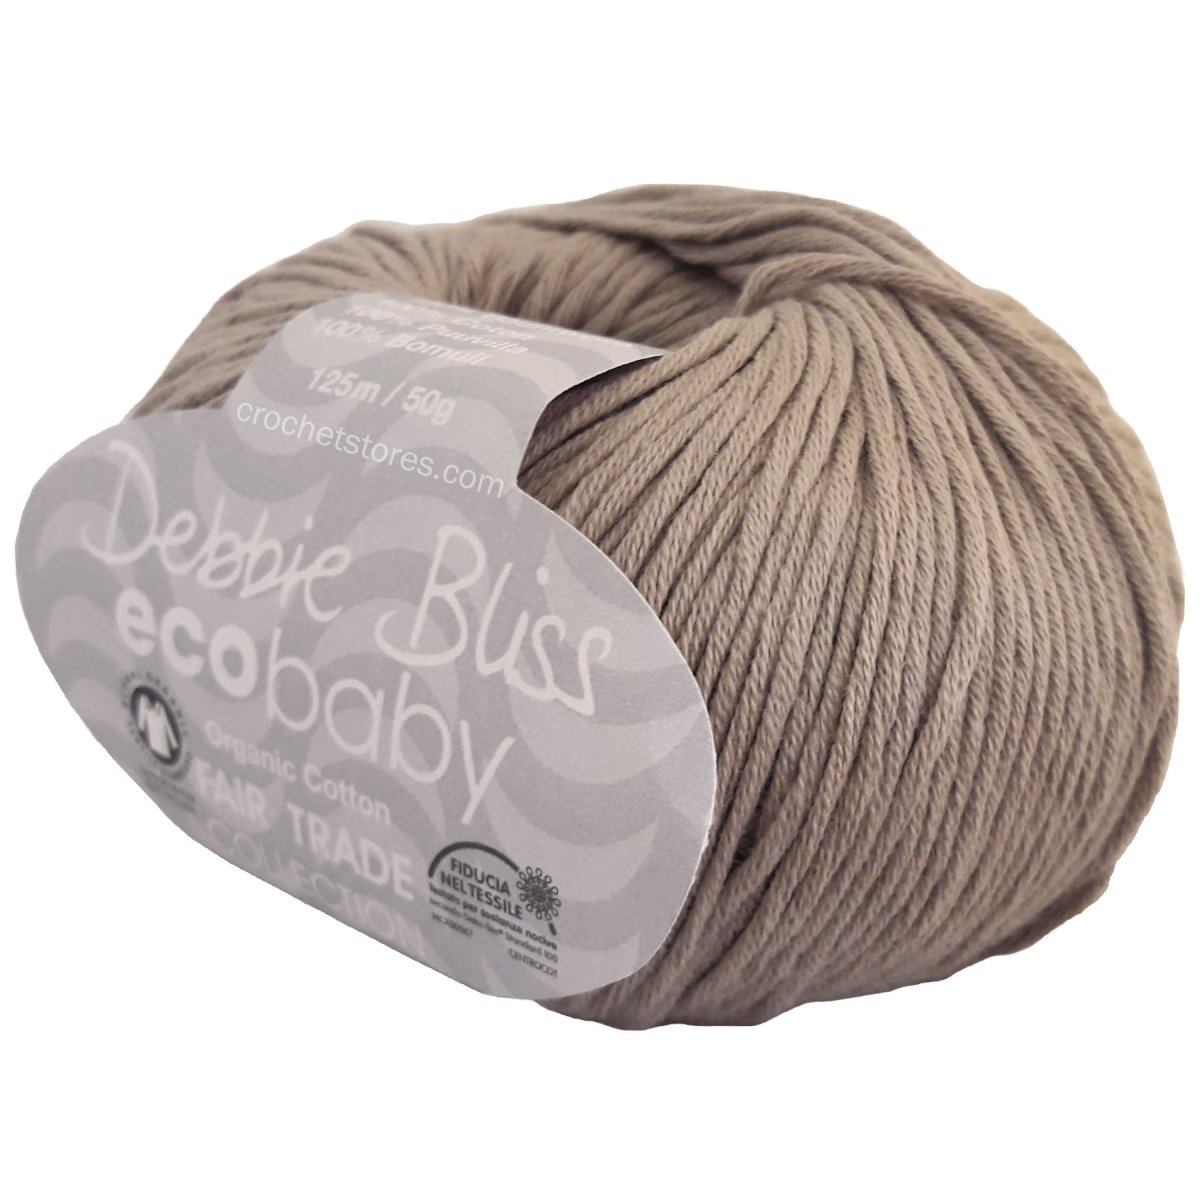 ECO BABY - CrochetstoresDB140158320980140155